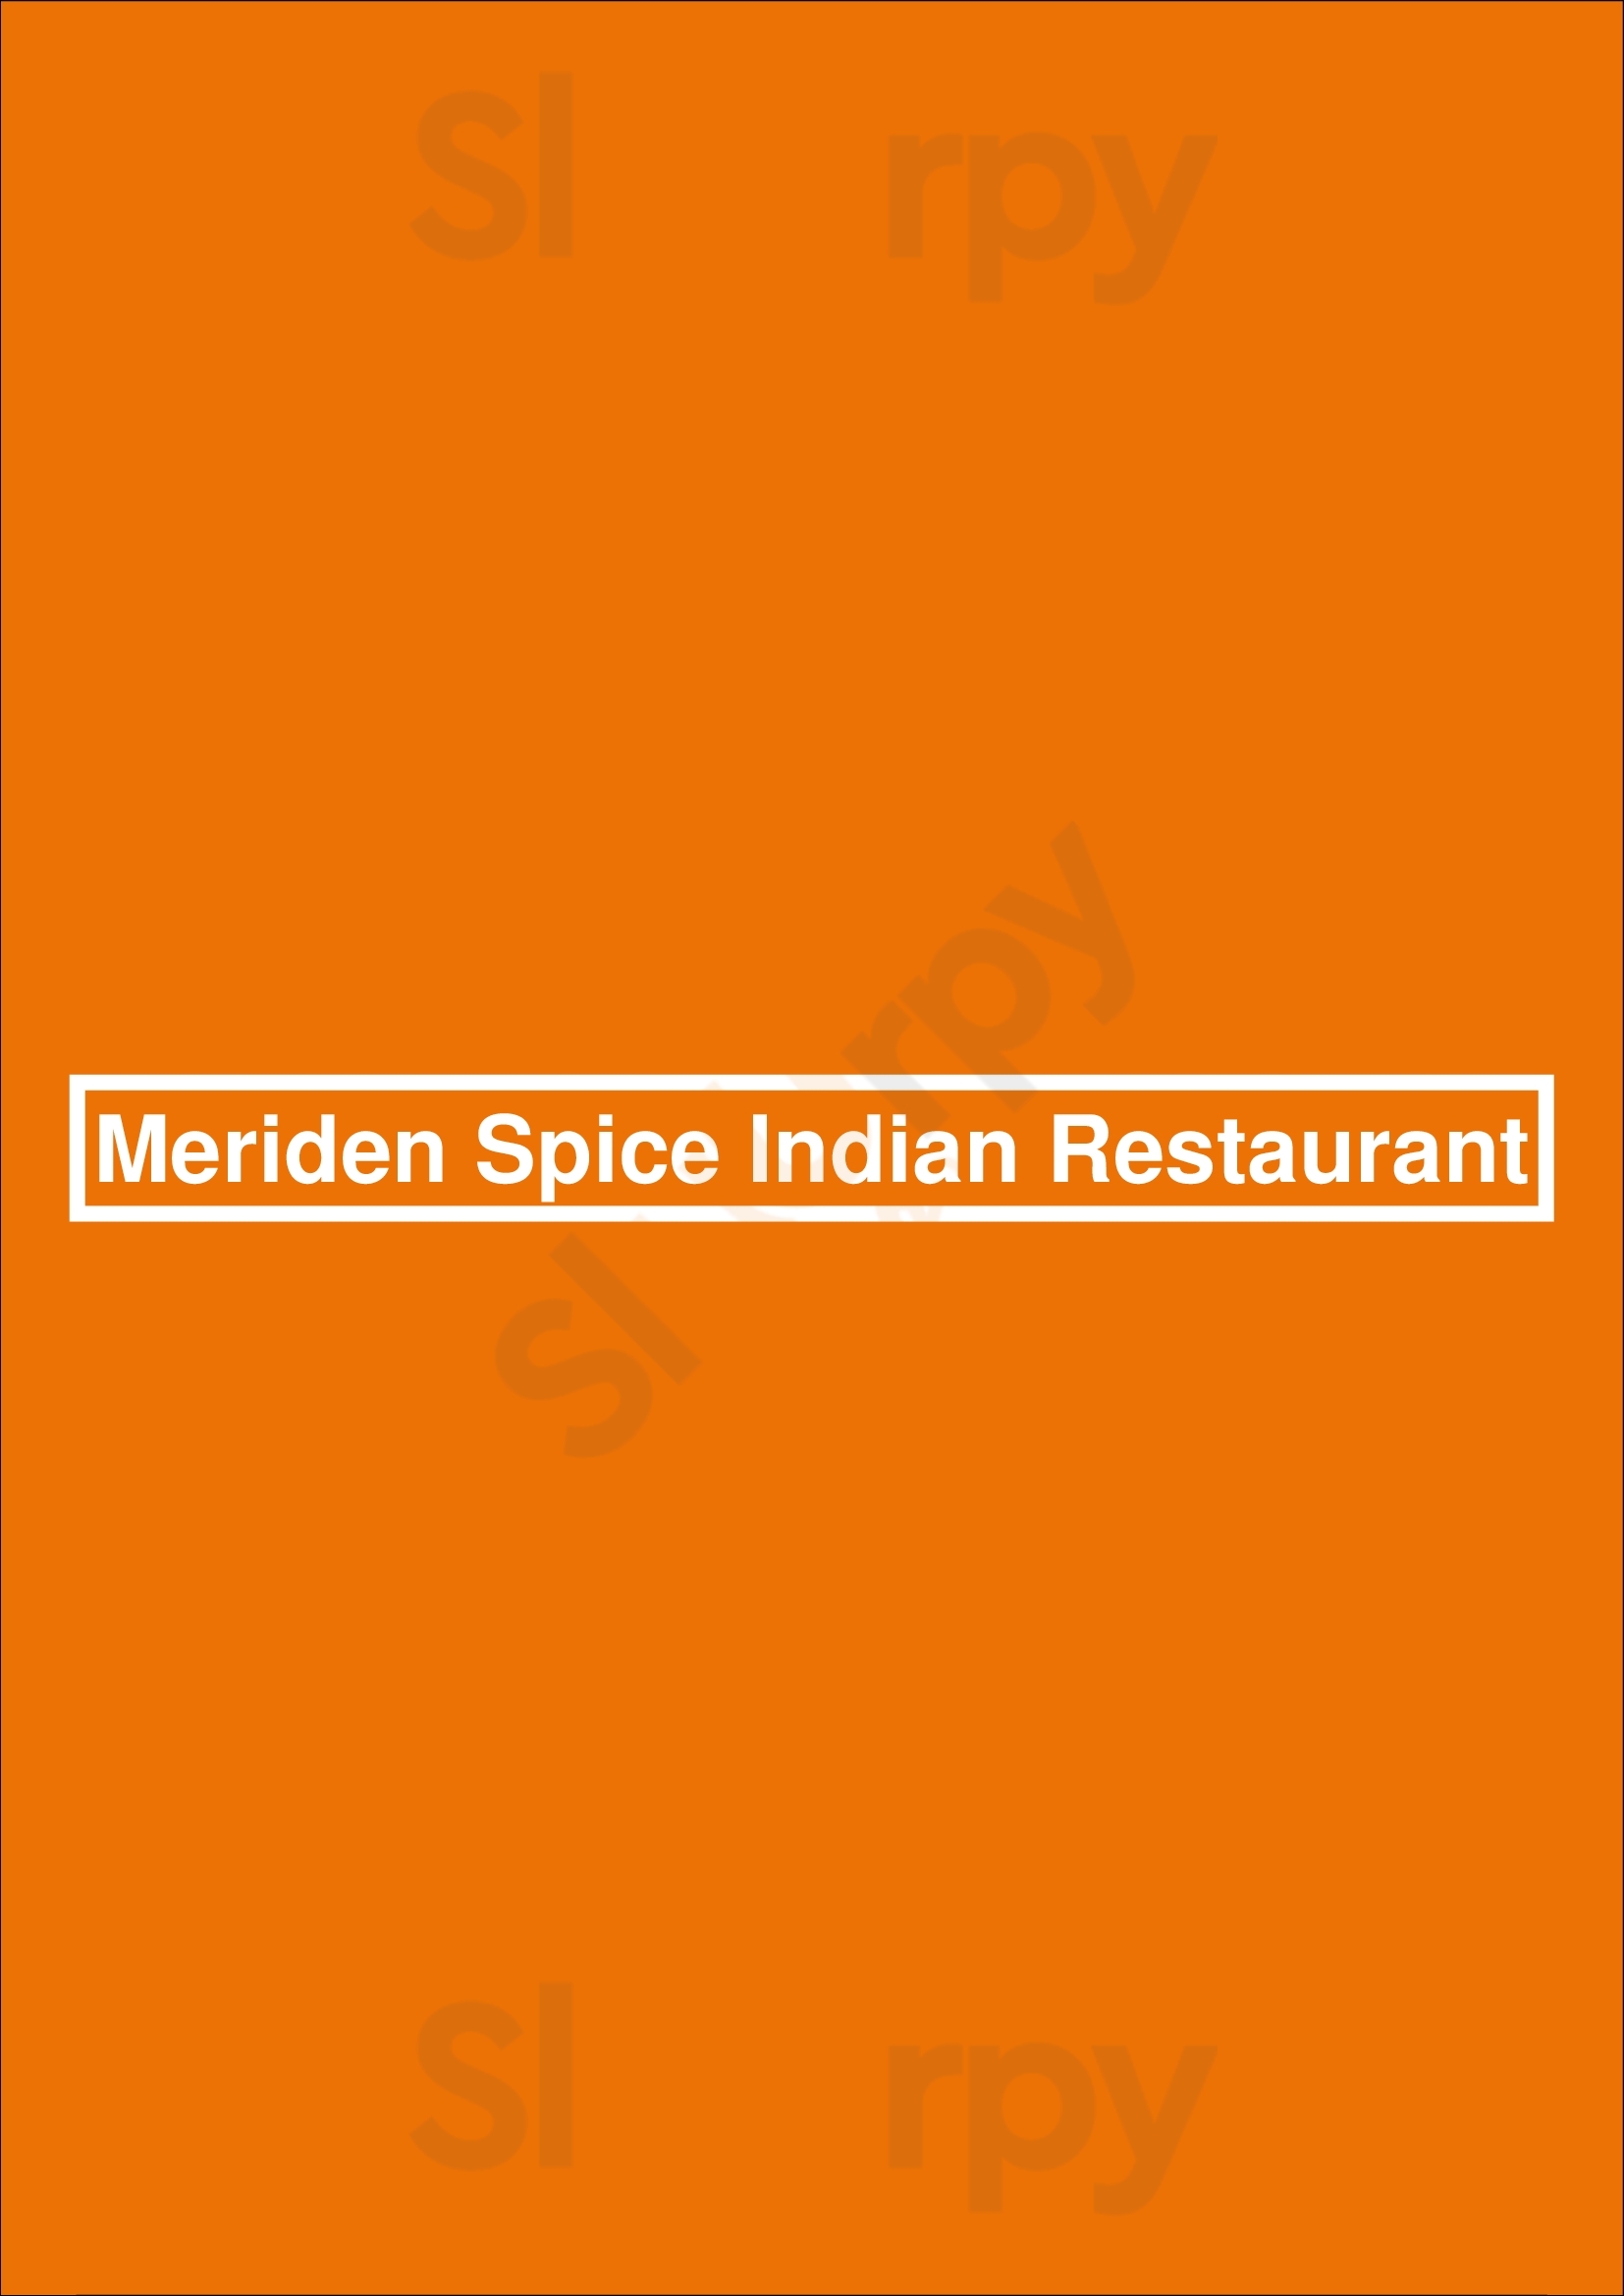 Meriden Spice Indian Restaurant Coventry Menu - 1